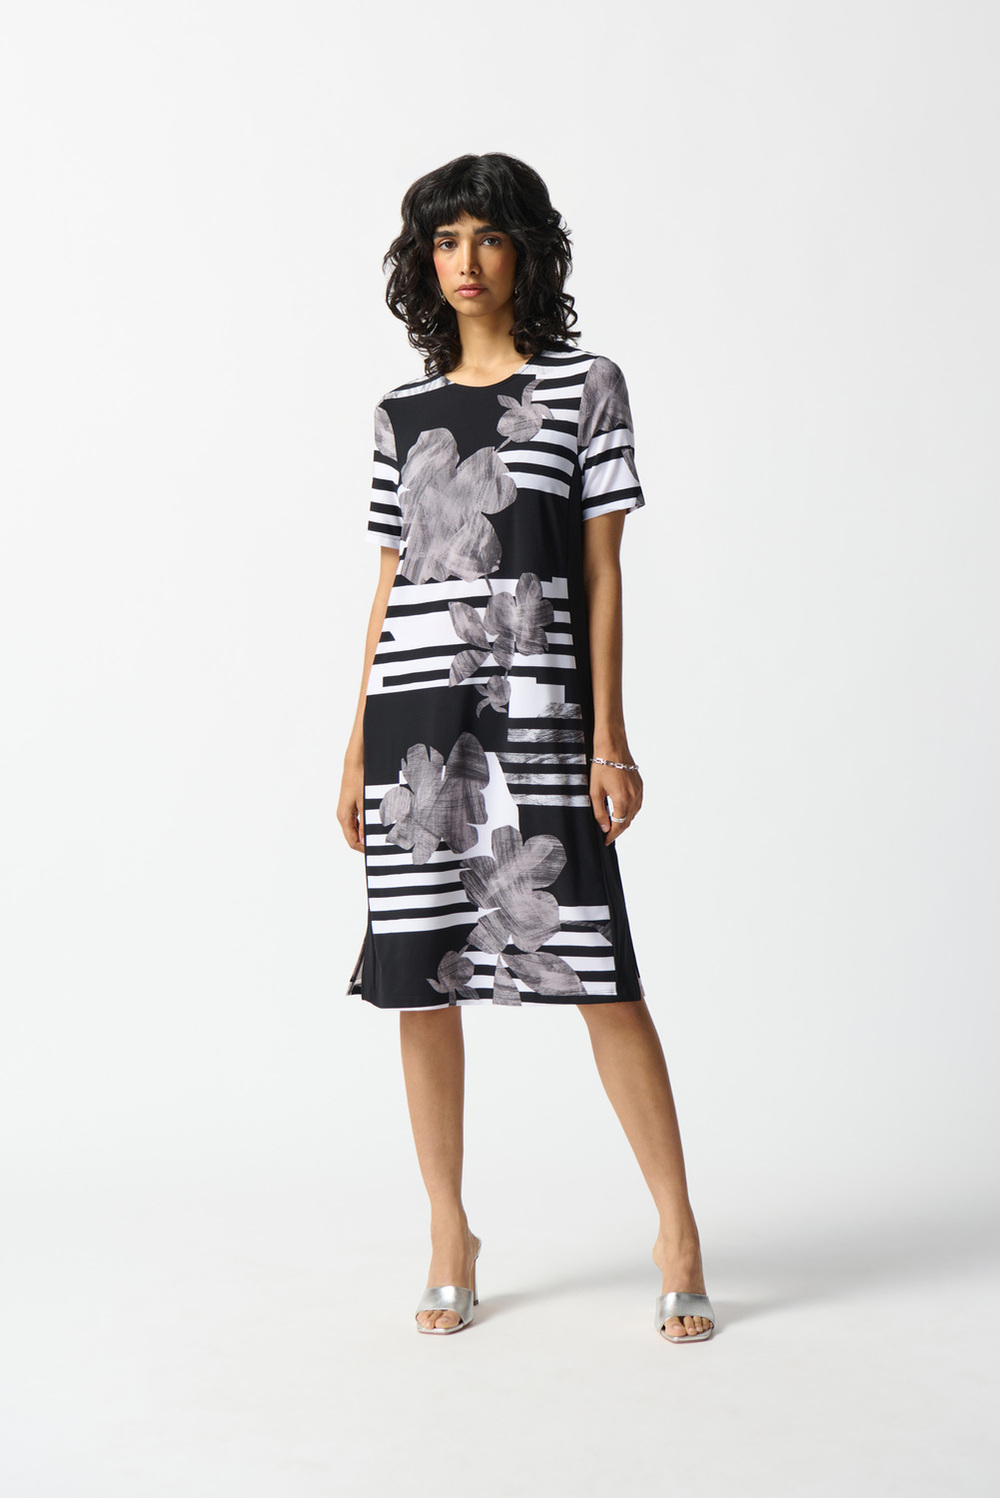 Printed & Striped Shirt Dress Style 242118. Vanilla/black